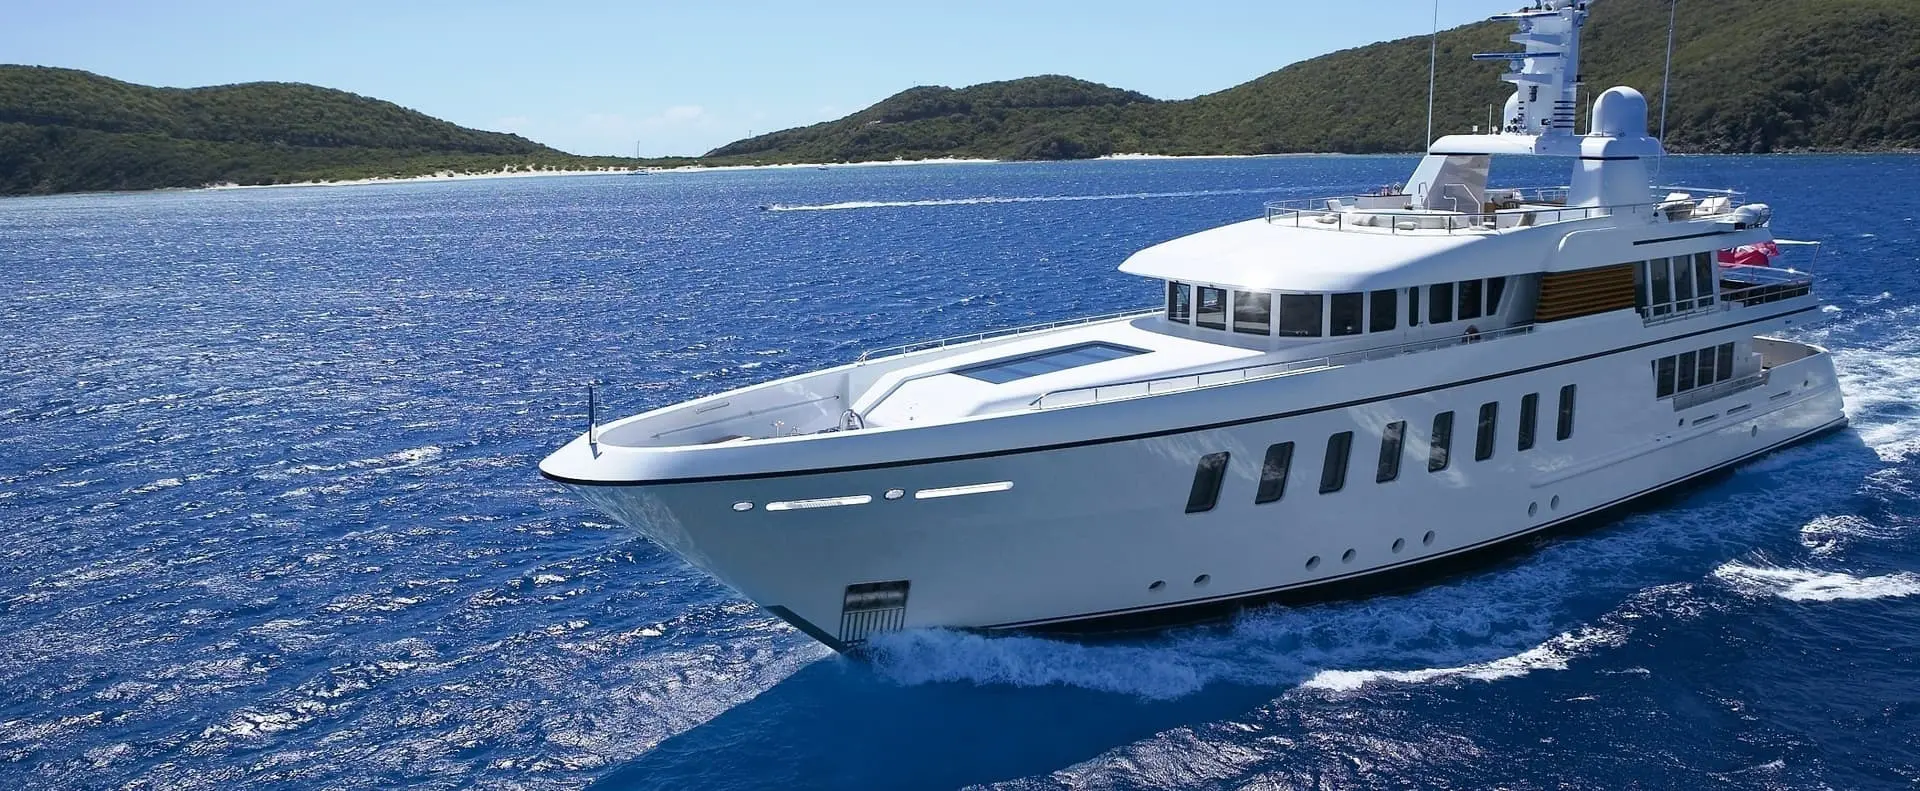 Luxury Motor Yachts for Charter in Croatia